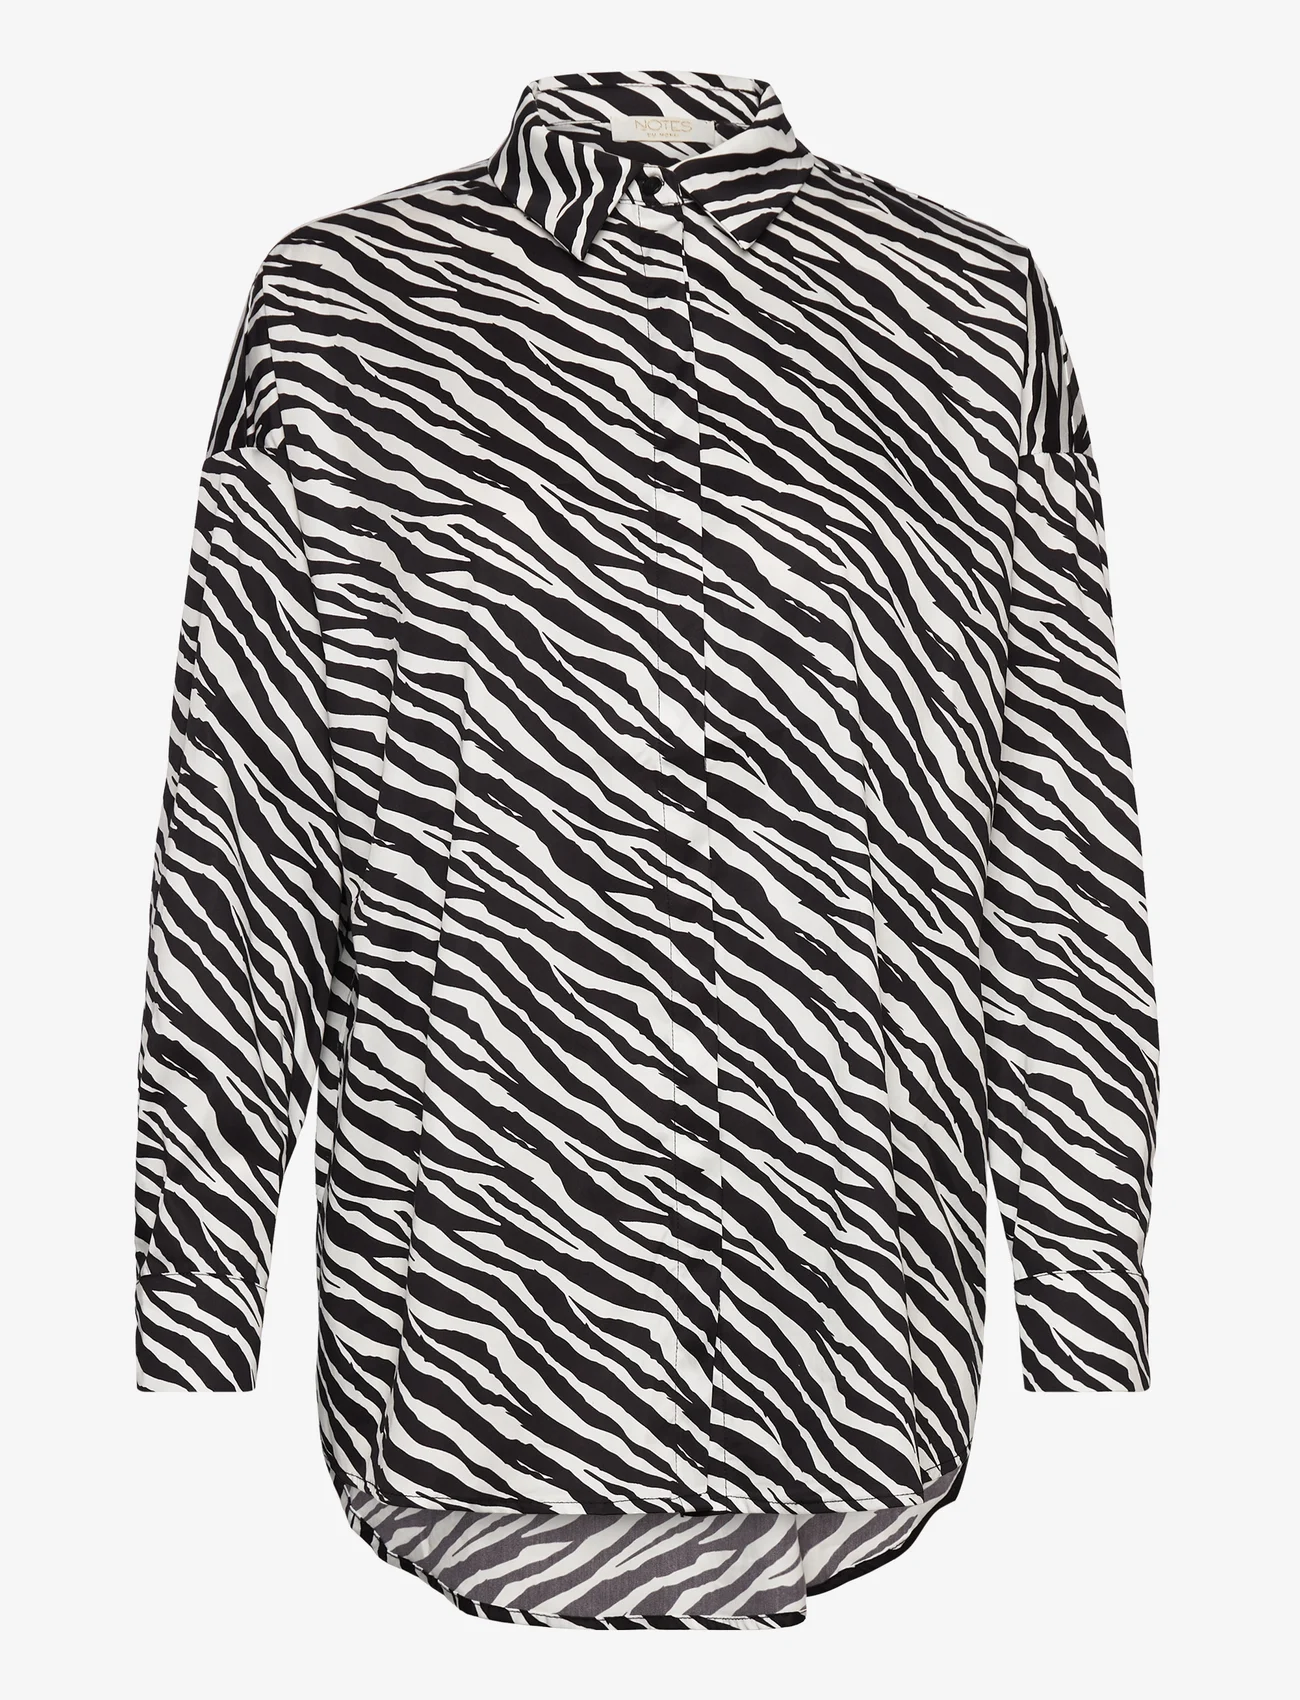 Notes du Nord - Kira Shirt P - langærmede skjorter - zebra - 0